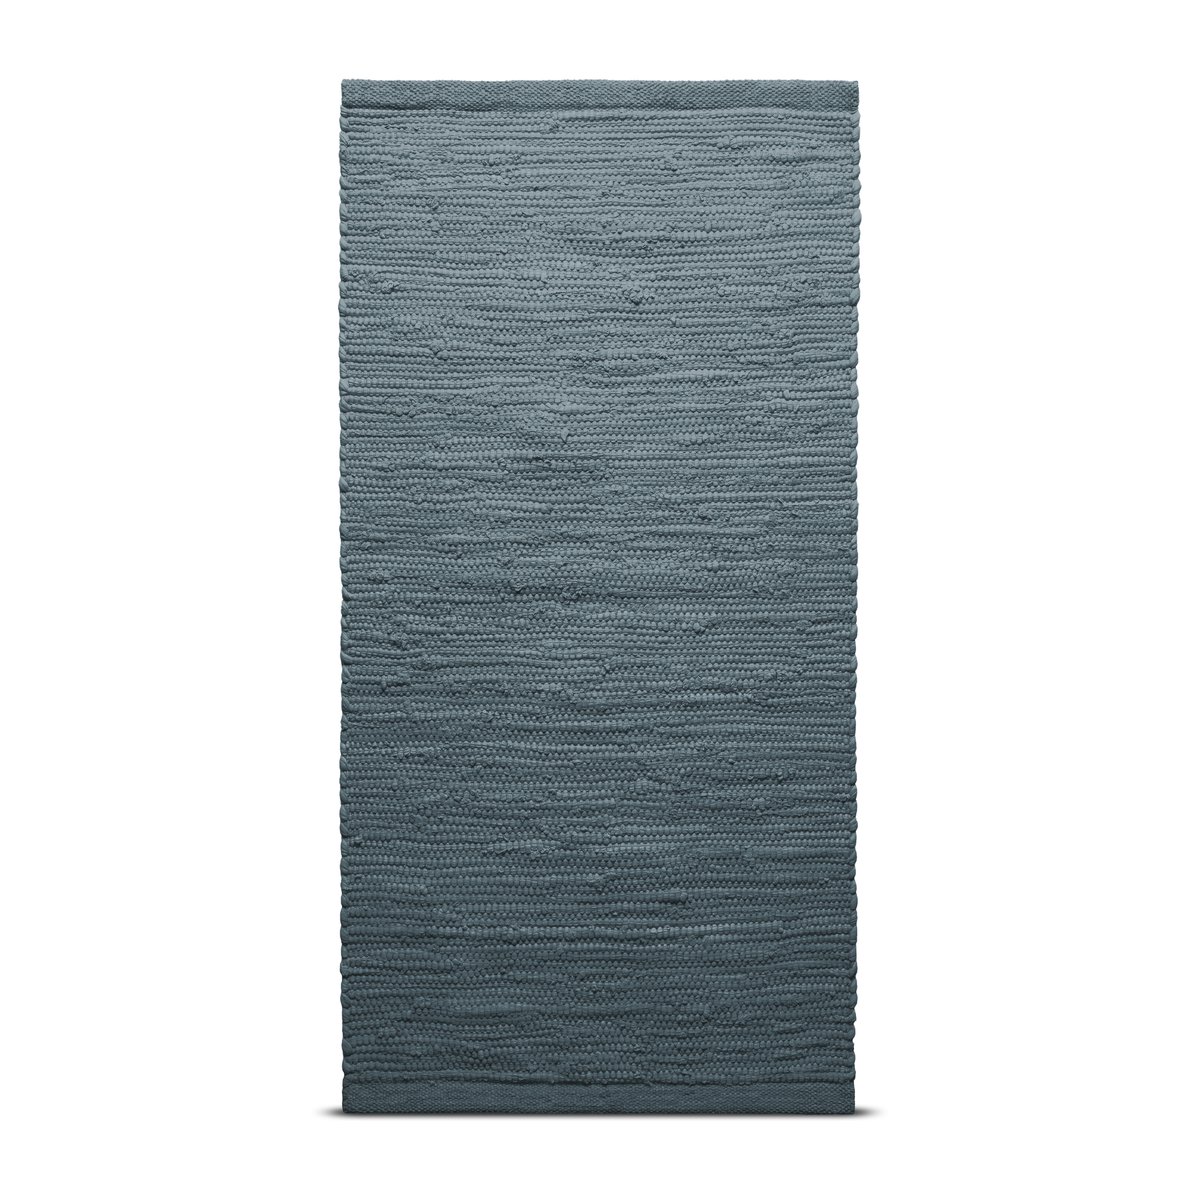 Bilde av Rug Solid Cotton teppe 170 x 240 cm steel grey (grå)